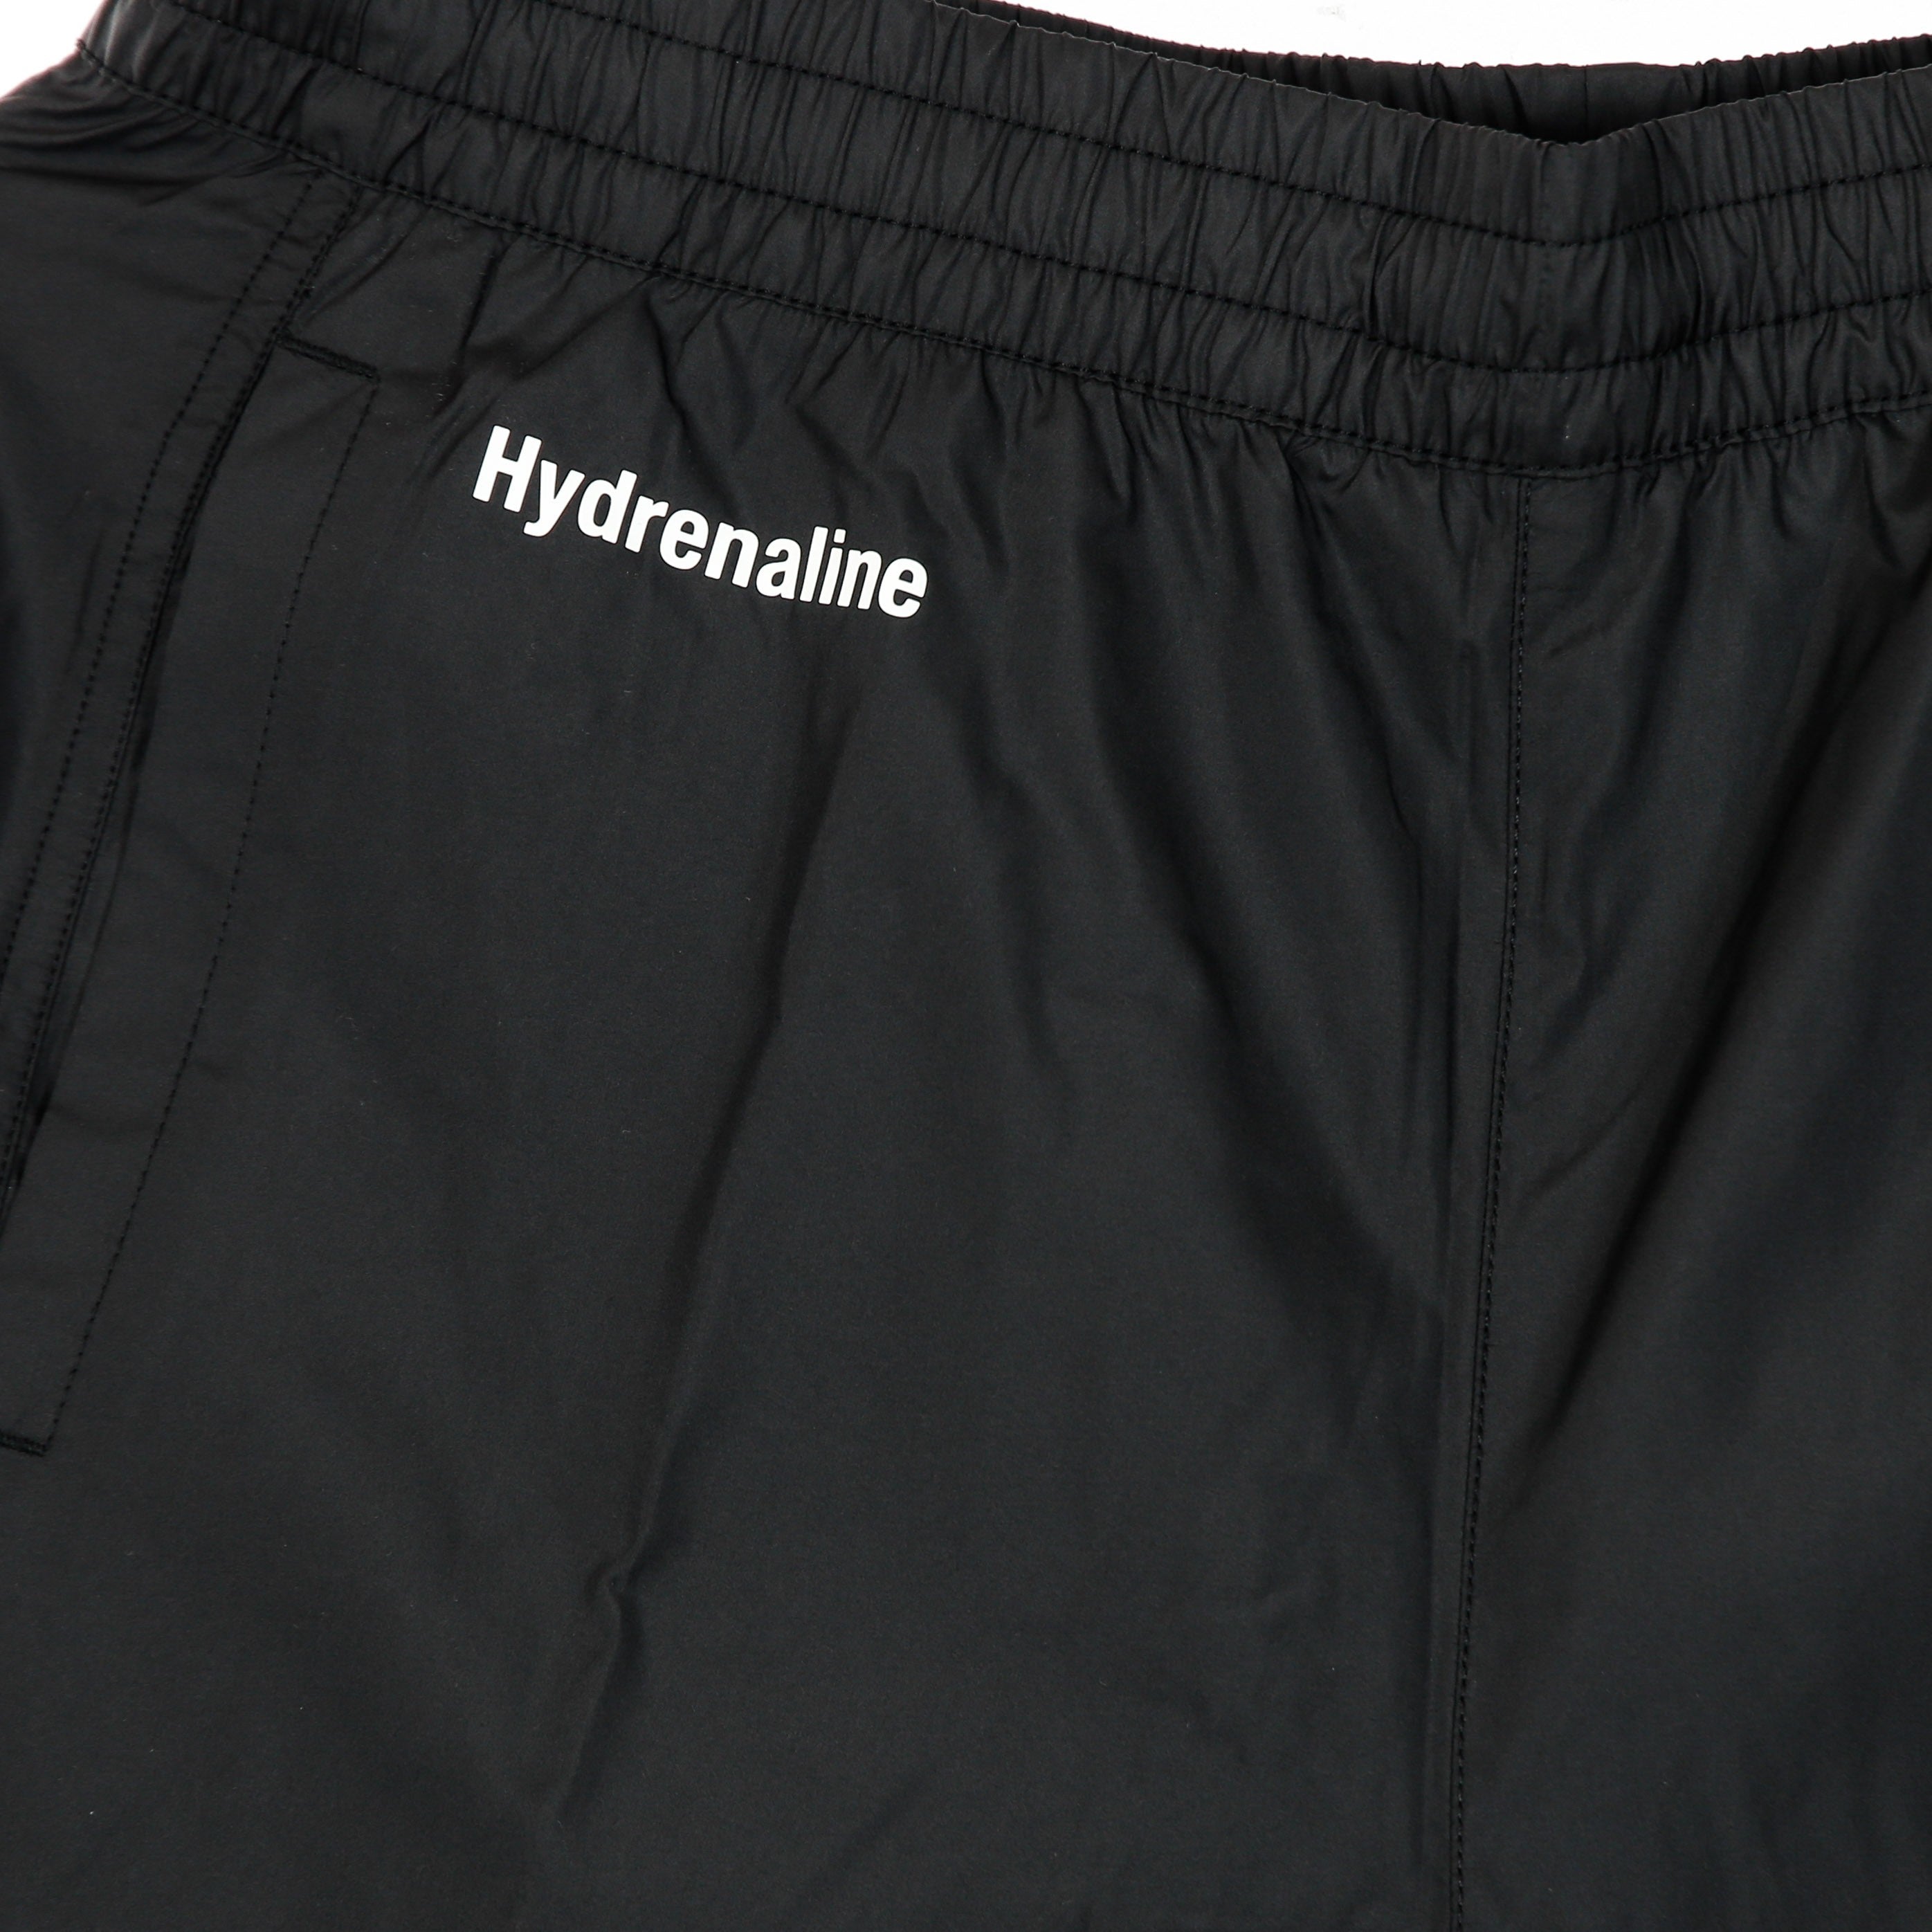 Hydrenaline Wind Short Men's Shorts